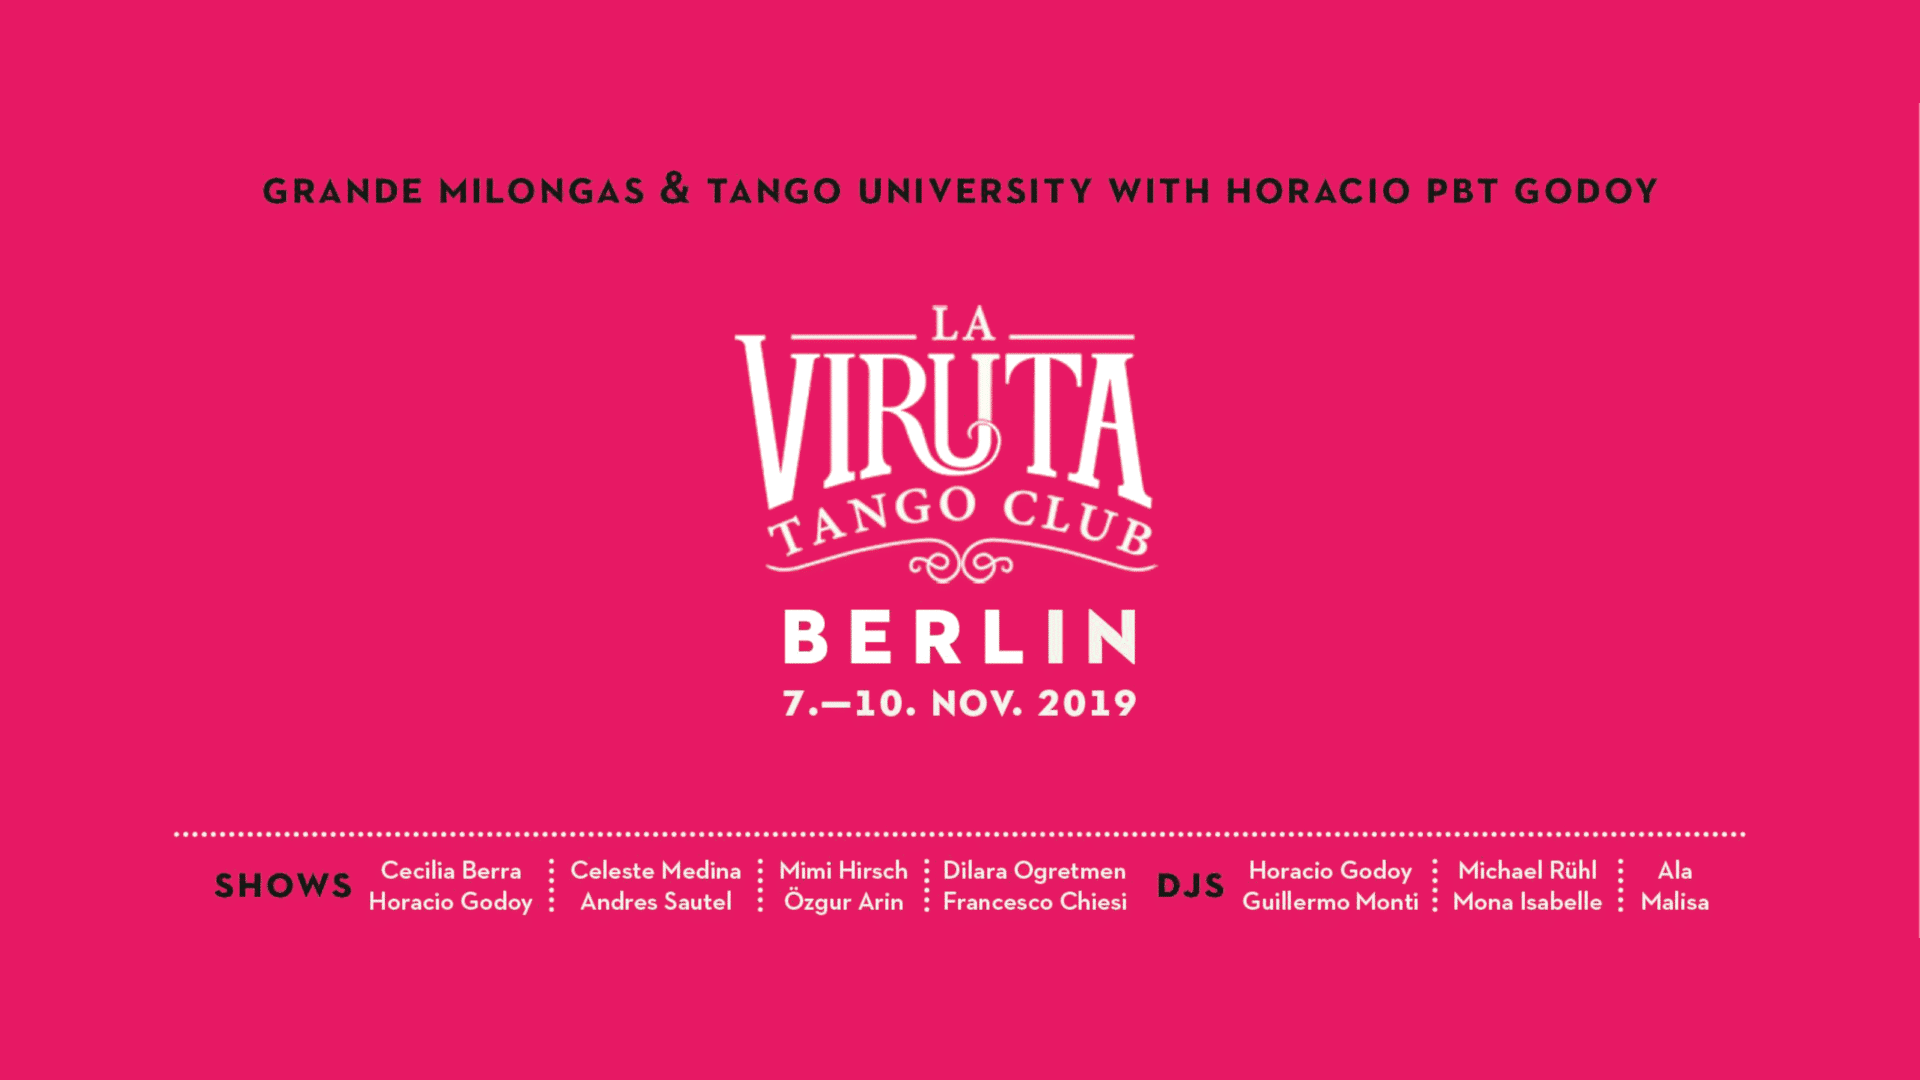 La Viruta Tango Club Berlin 2019 event picture